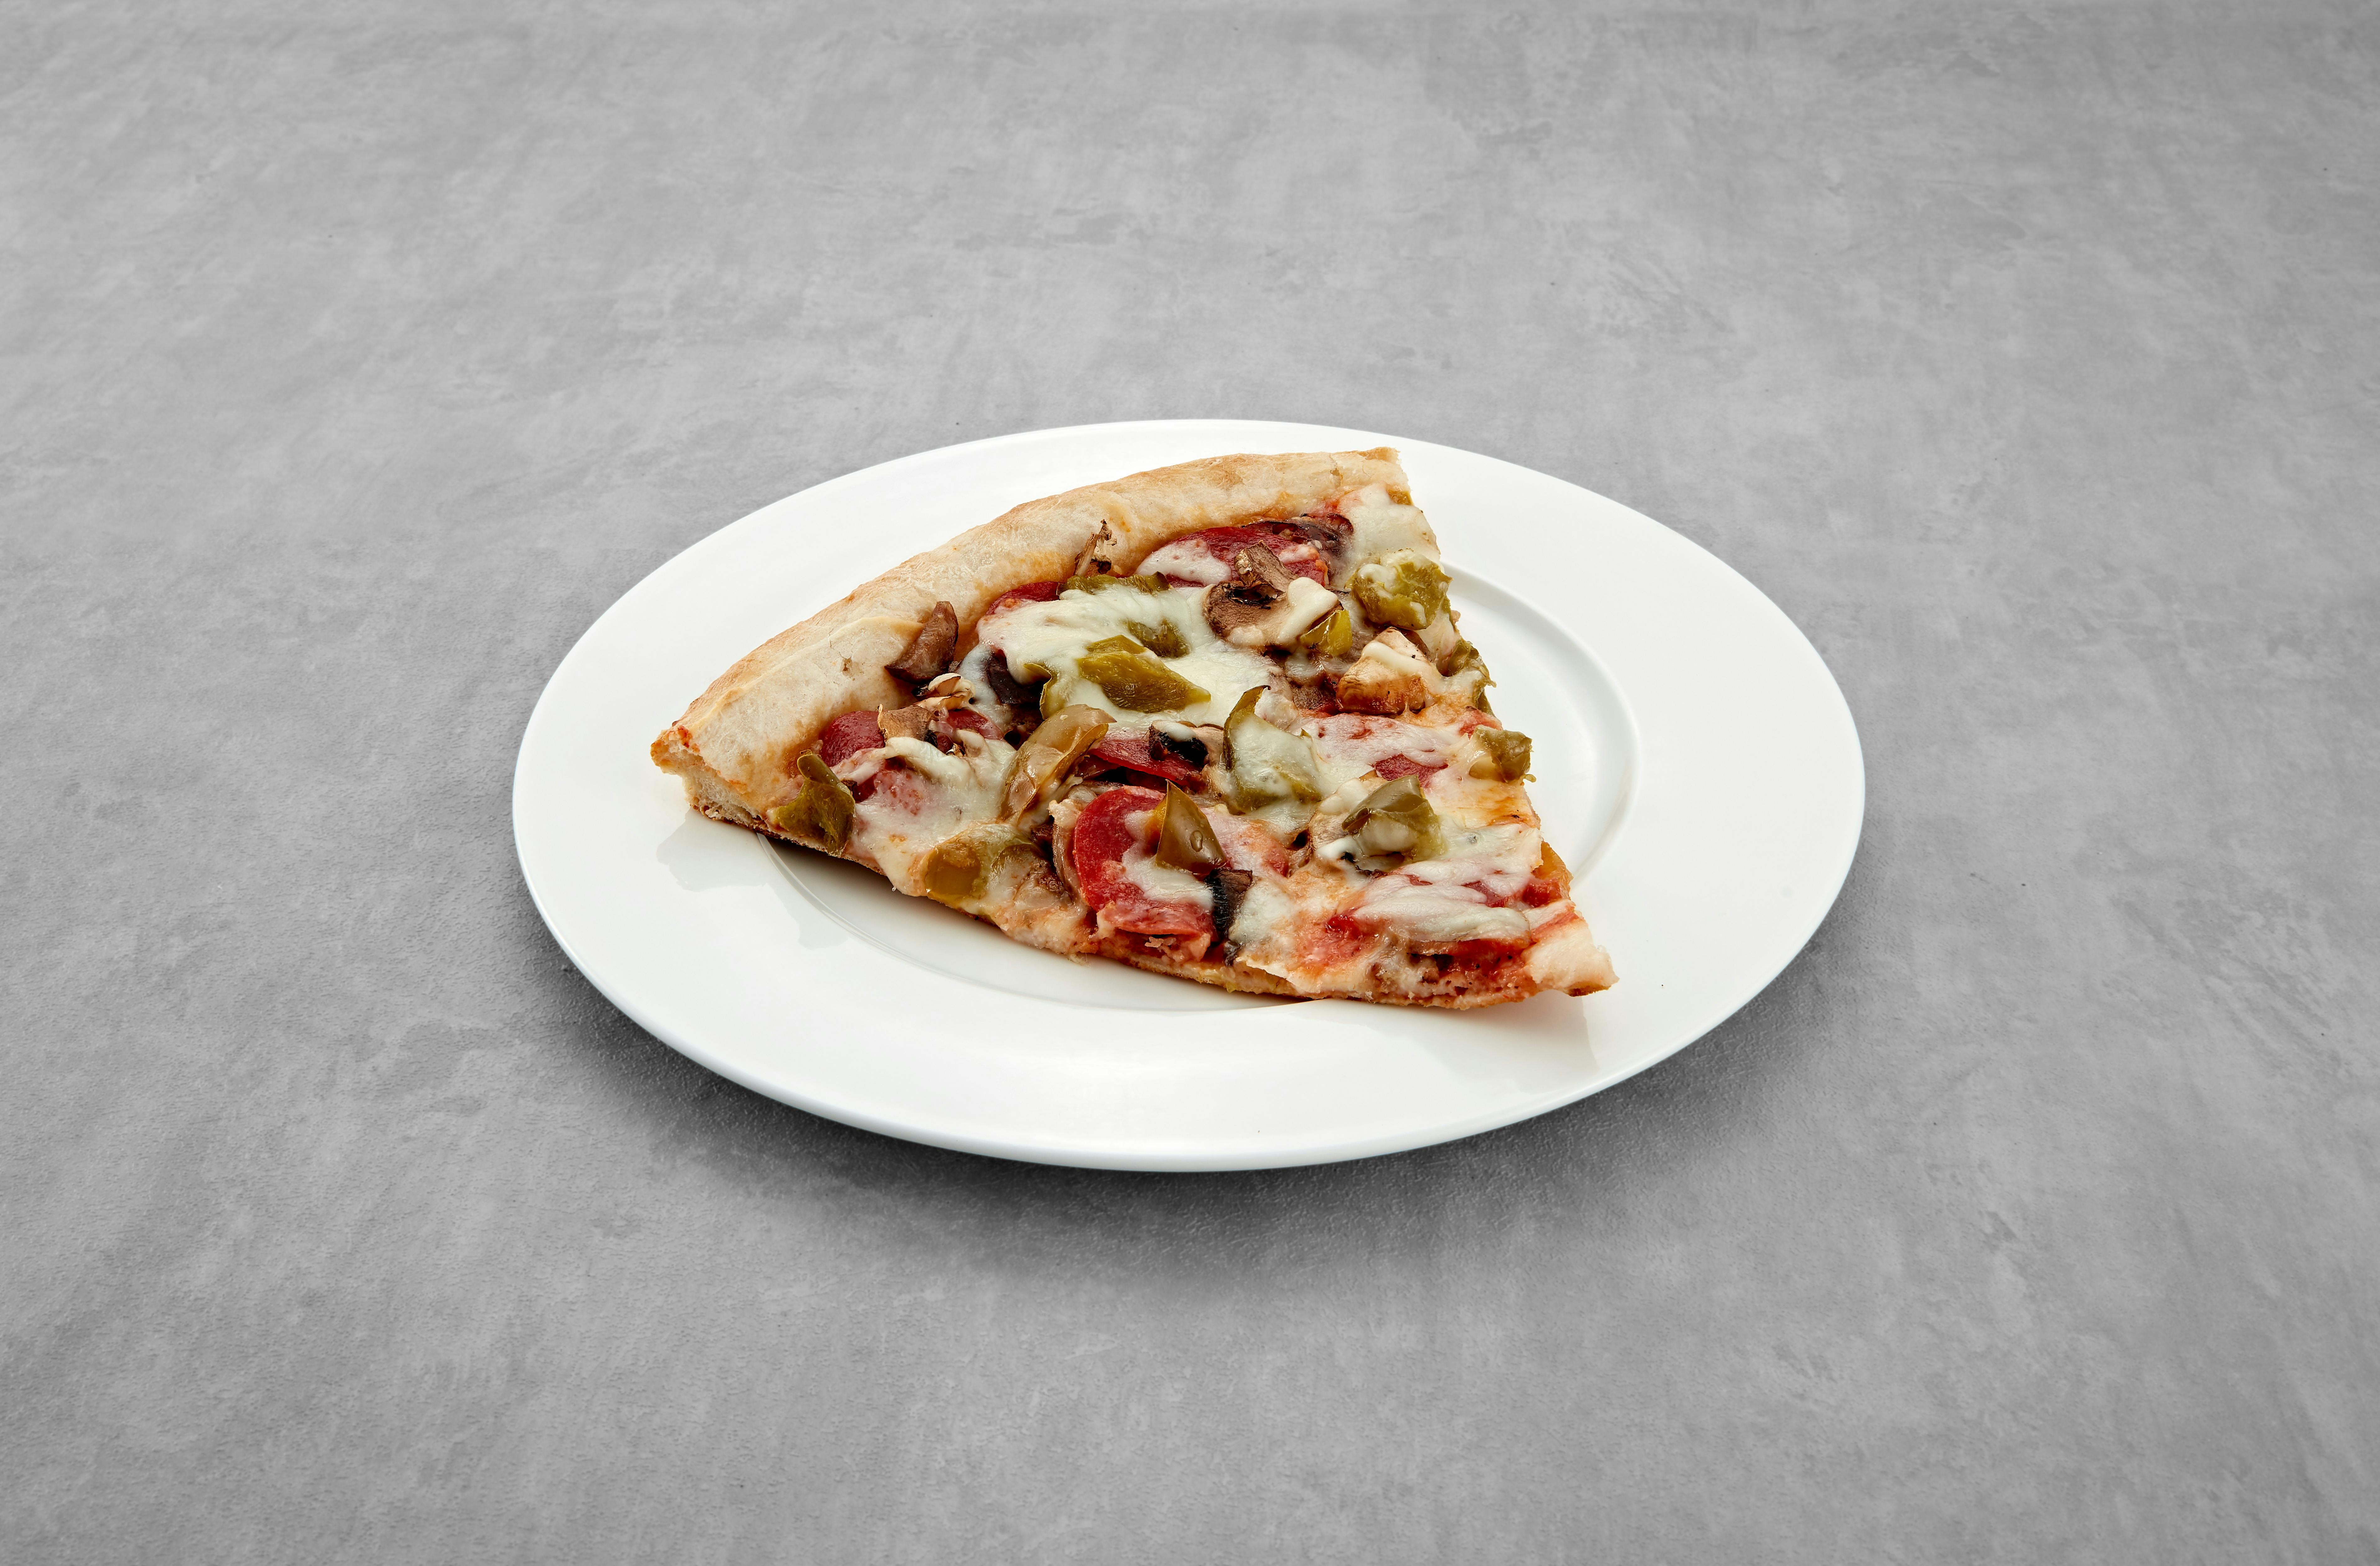 Mario's Special Pizza Slice from Mario's Pizzeria in Seaford, NY